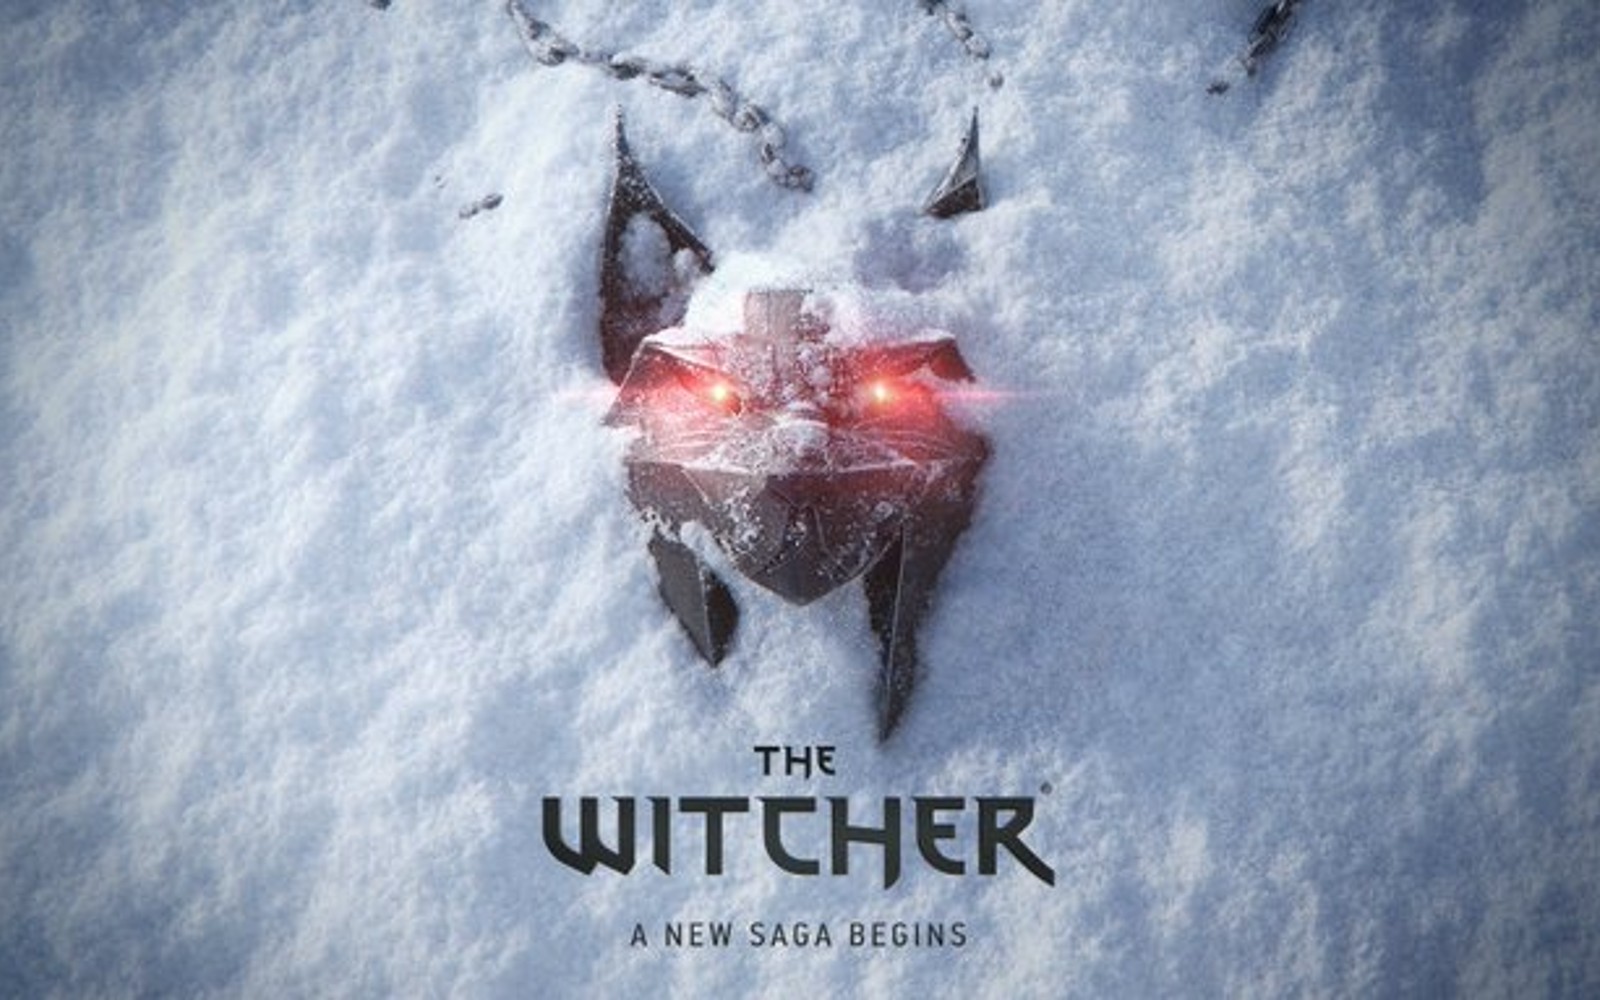 CD Projekt Red Kerjakan Game Witcher Baru Dengan Unreal Engine 5